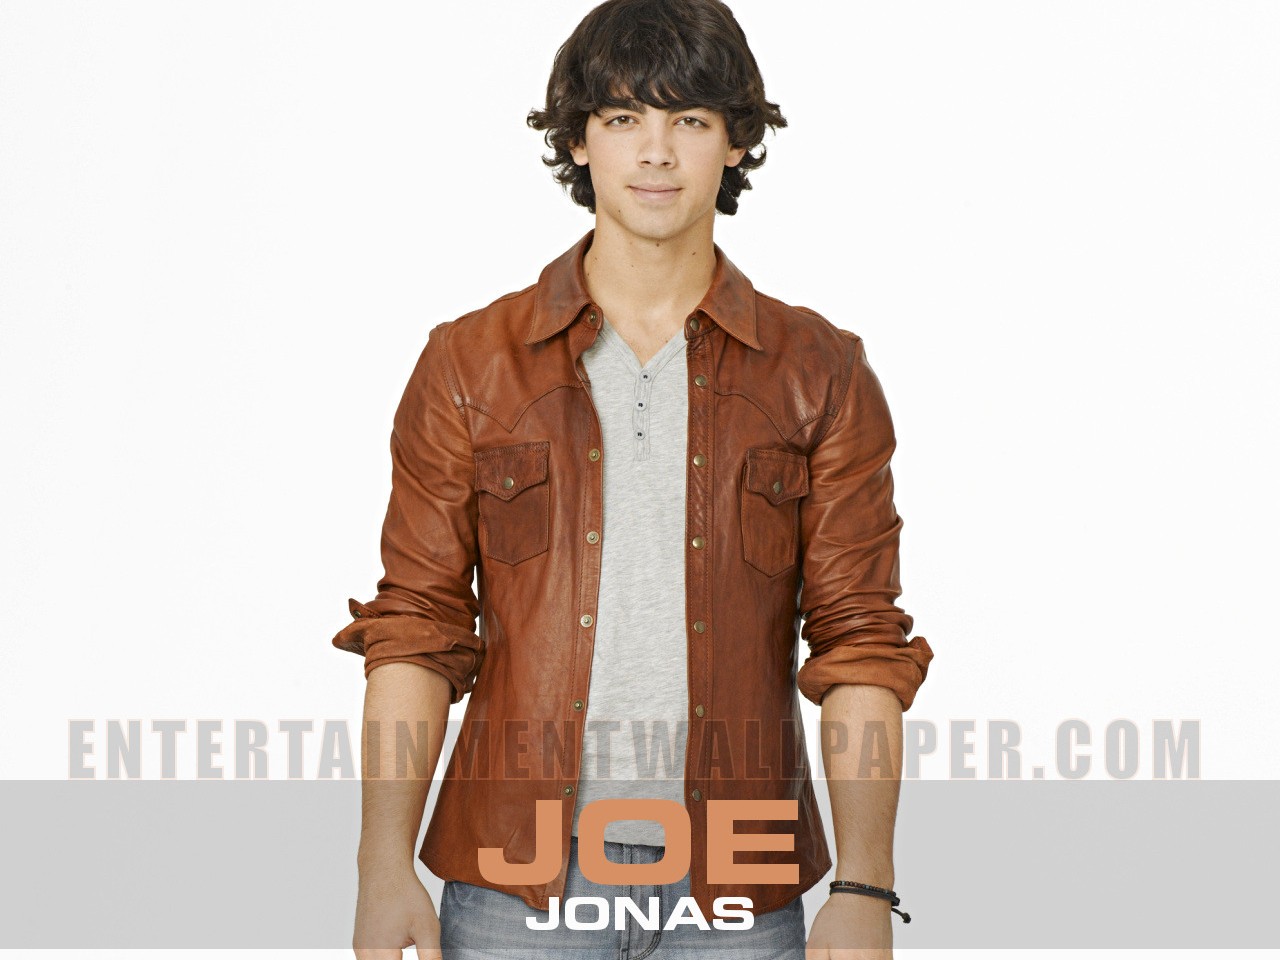 Joe Jonas Wallpaper Desktop